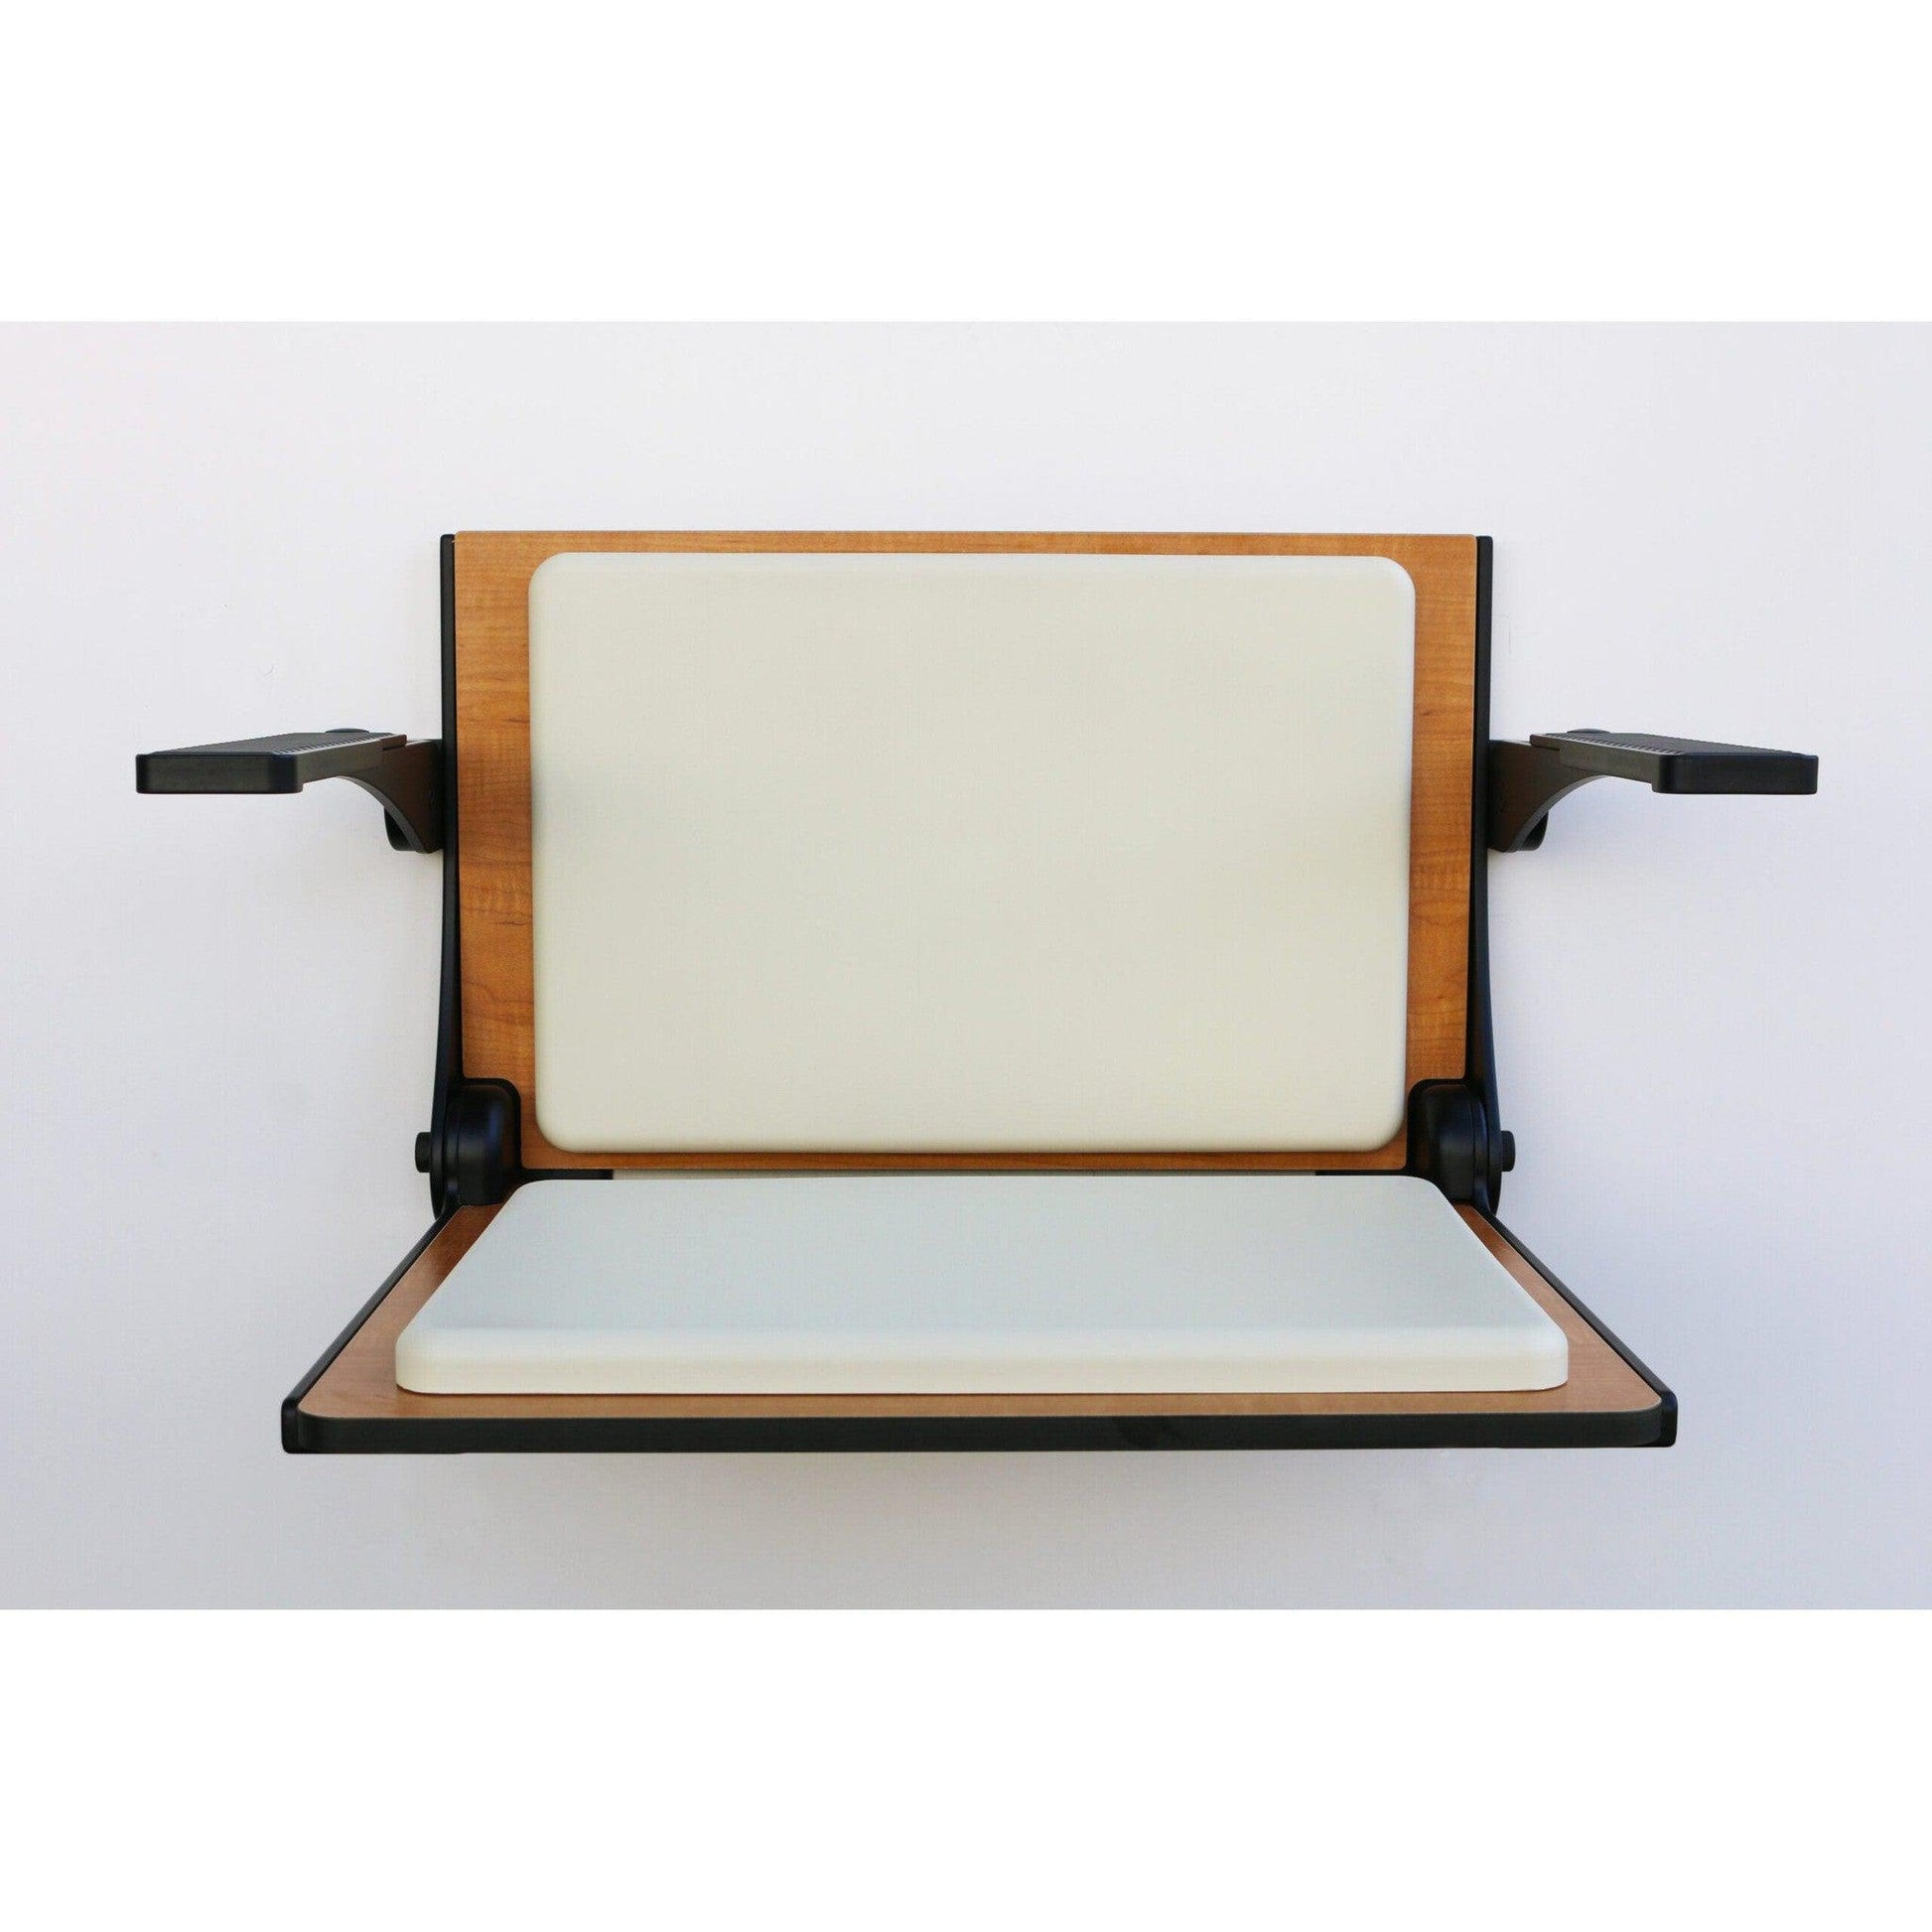 Seachrome Lifestyle & Wellness 16" W x 11" D Almond Polyurethane Closed Cell Foam Silhouette Seat Pad